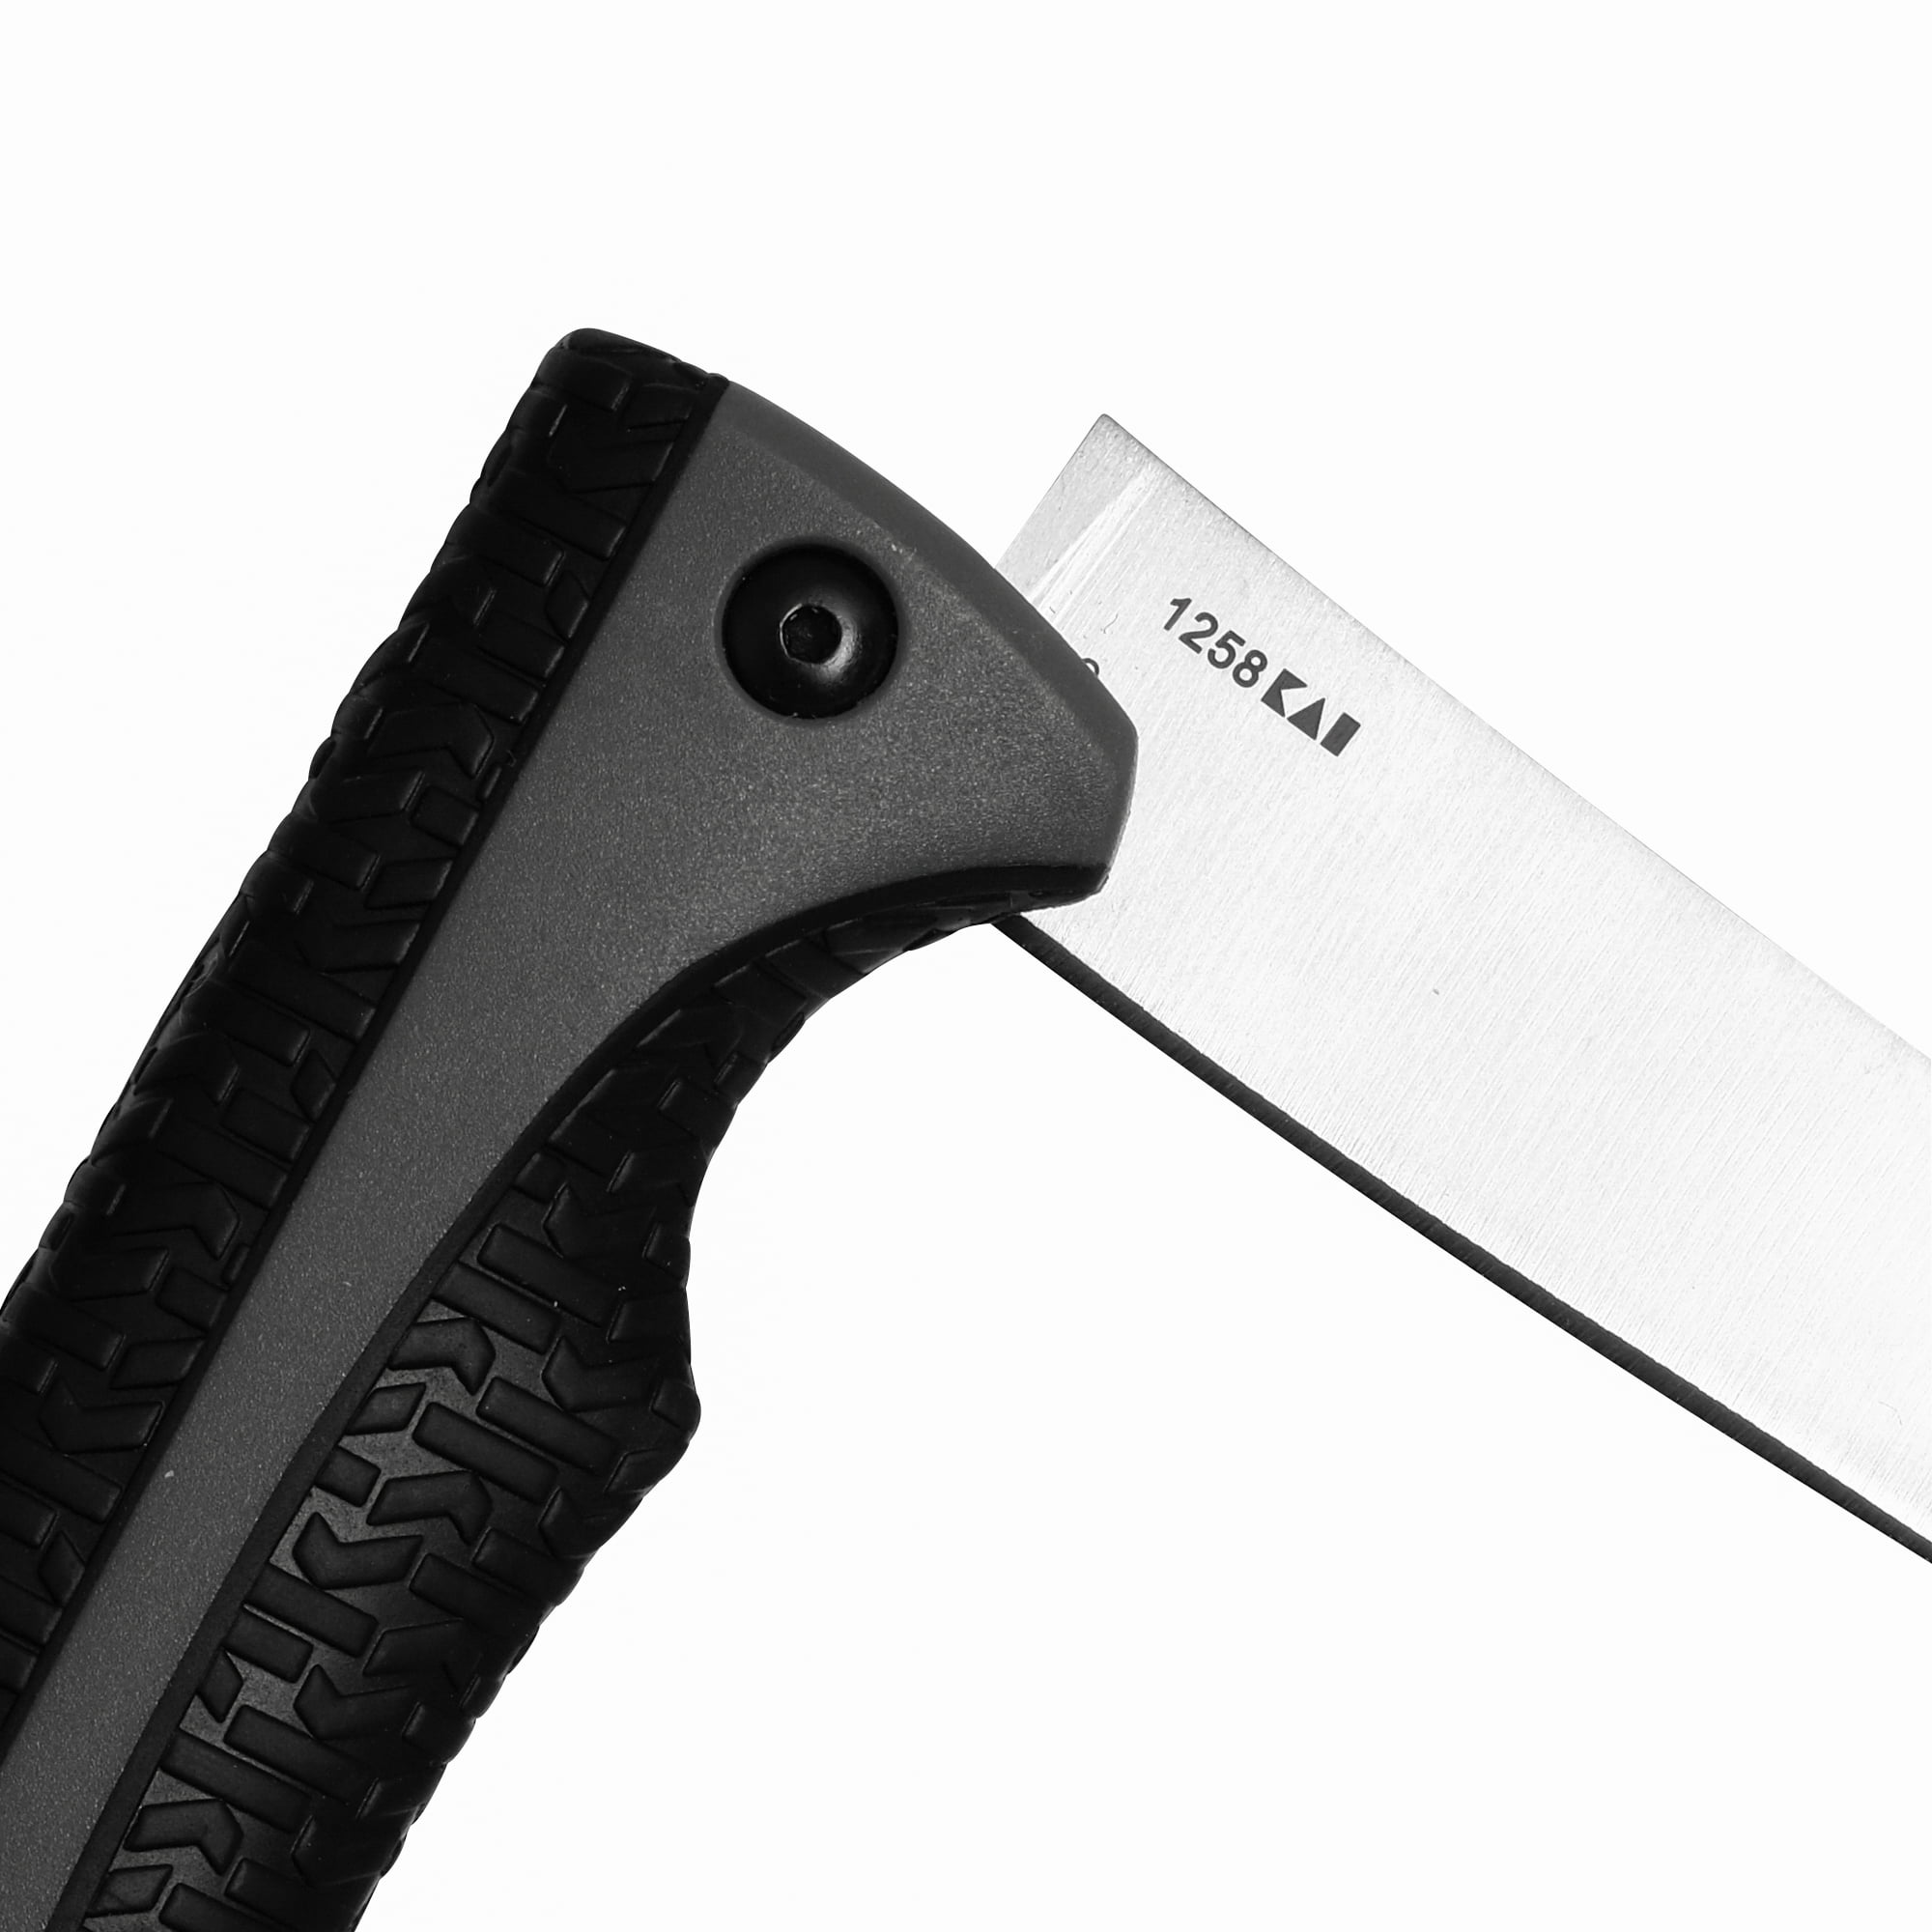 Kershaw - KS1259 - Clearwater II Fillet Knife - 420J2 Stainless - Black  Co-Polymer - Sharp Things OKC